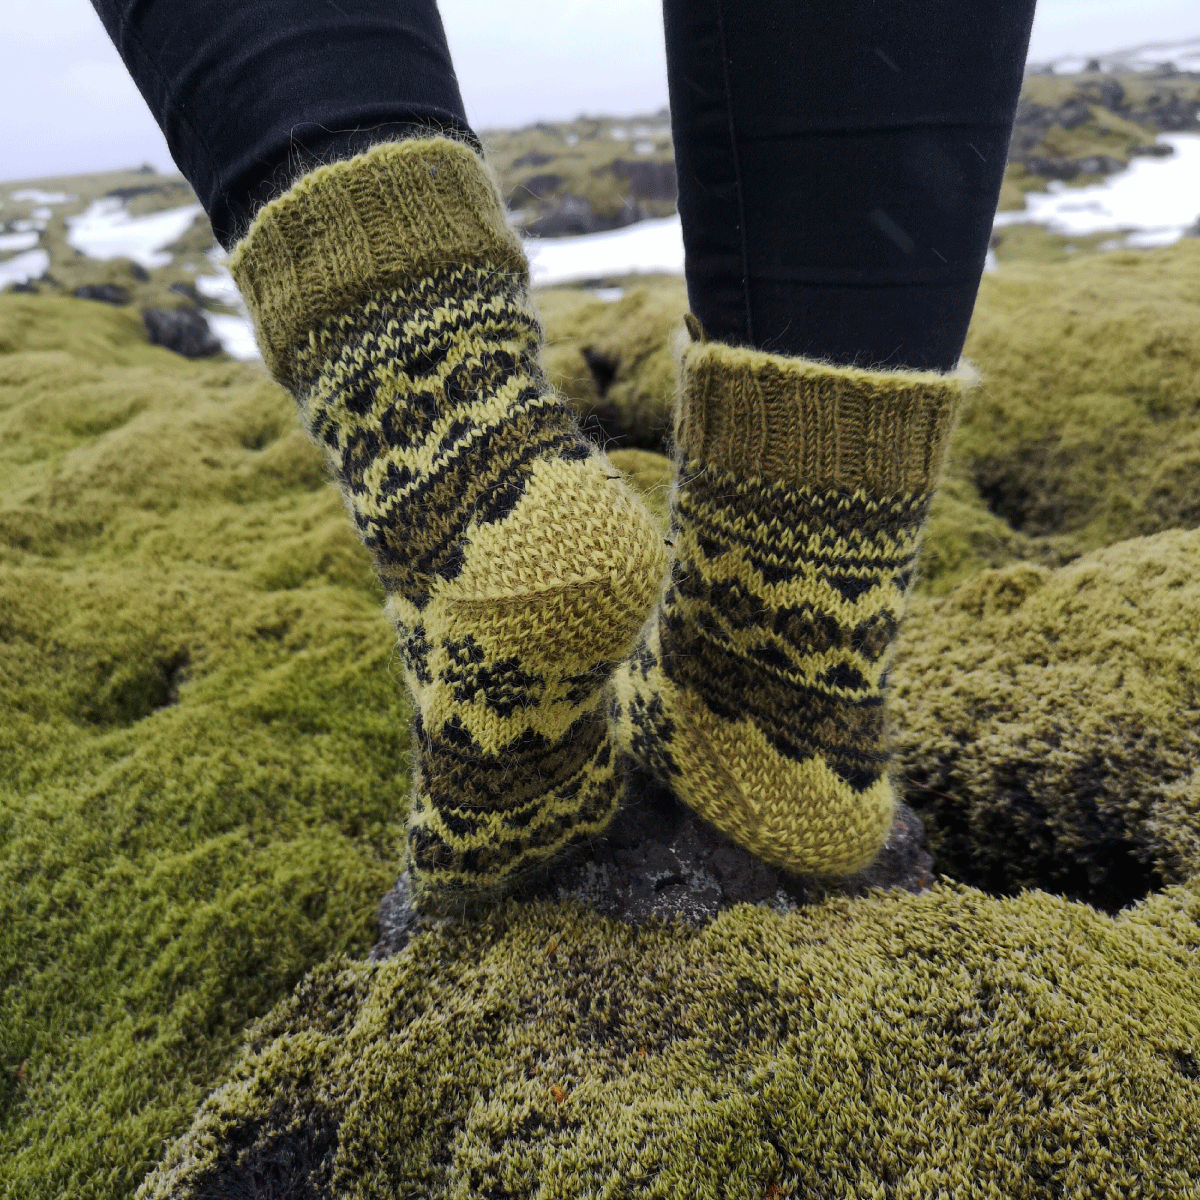 How to Knit Icelandic Socks with Hélène Magnússon – Selvedge Magazine